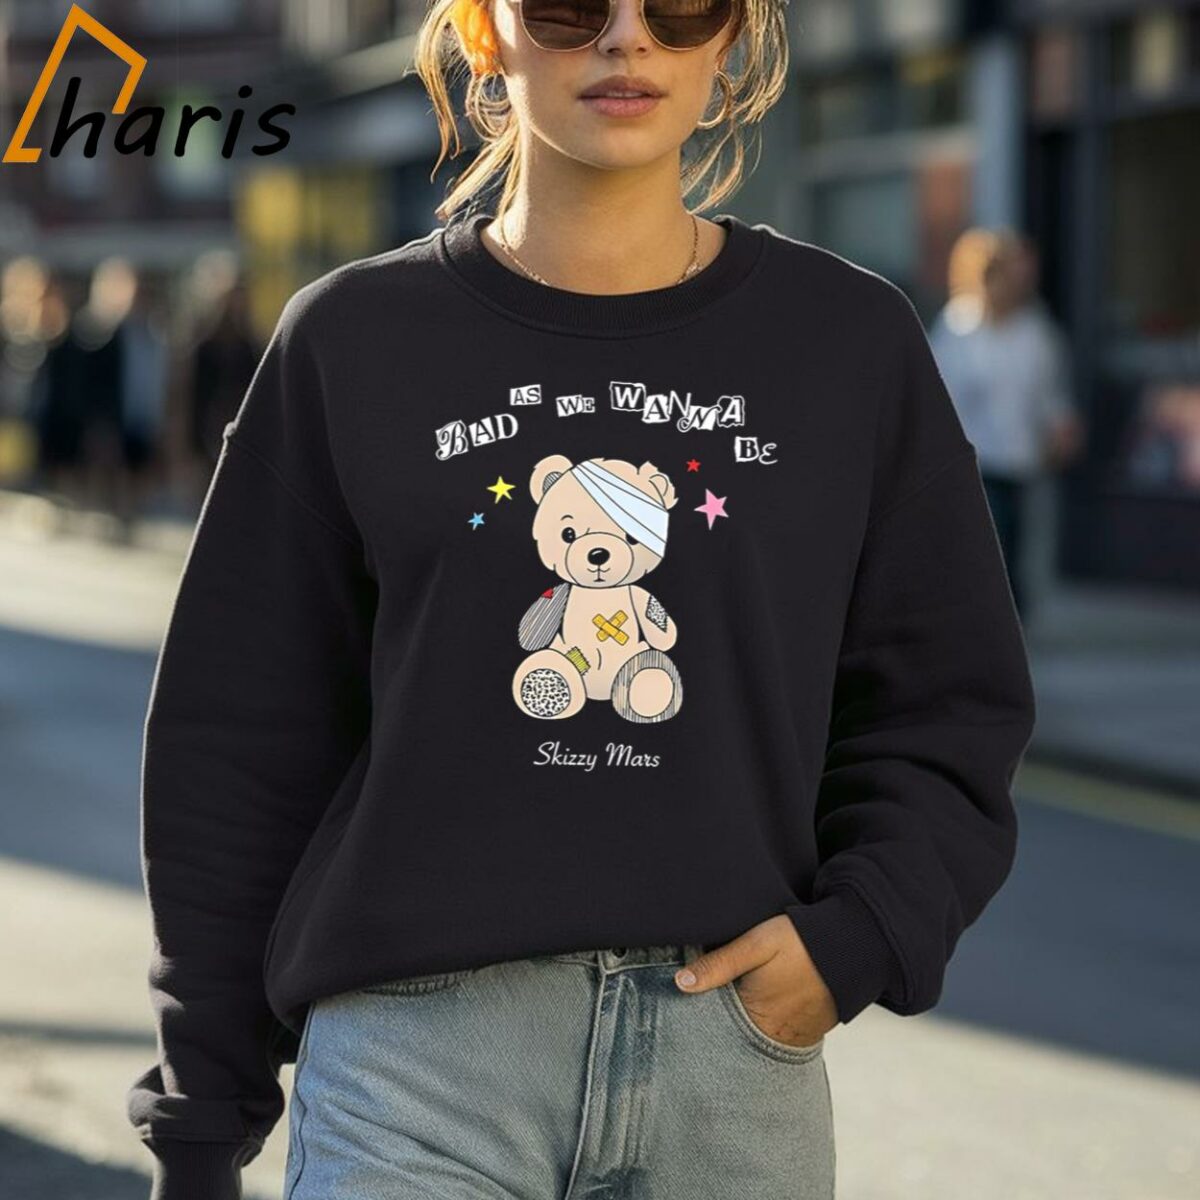 Bear Bad As We Wanna Be Skizzy Mars Shirt 4 Sweatshirt